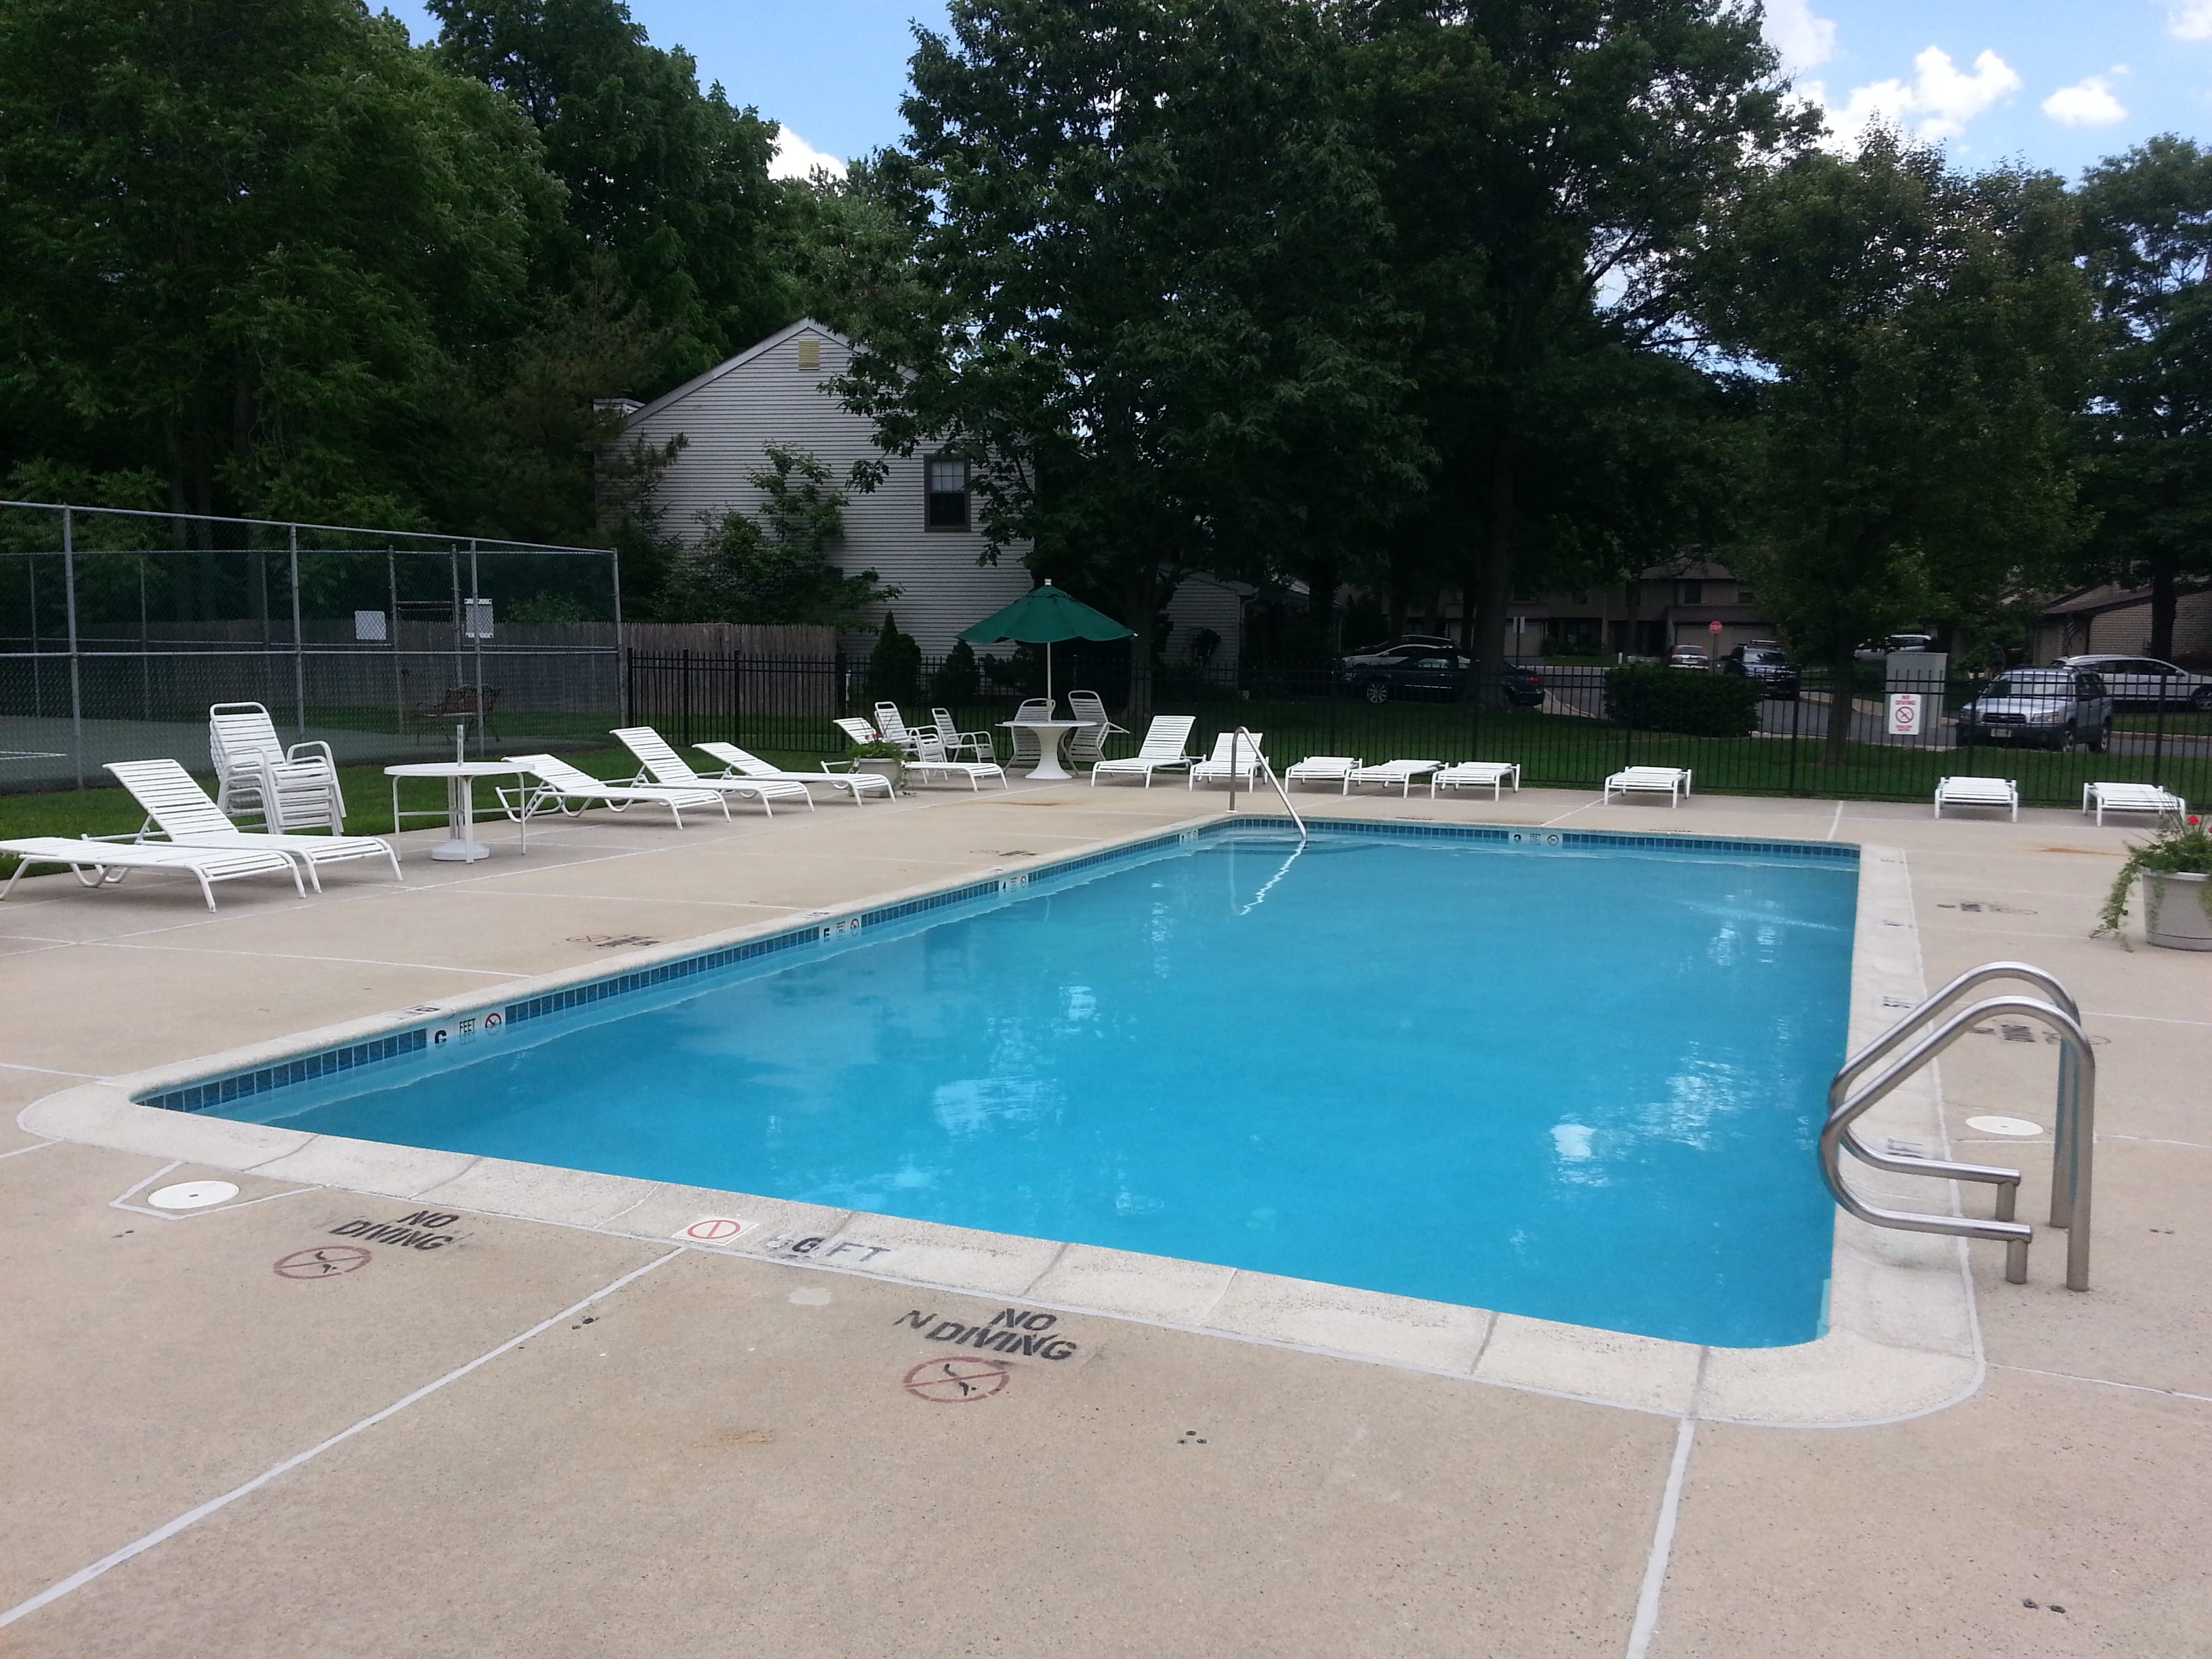 Kimberly Woods has a beautiful community pool.